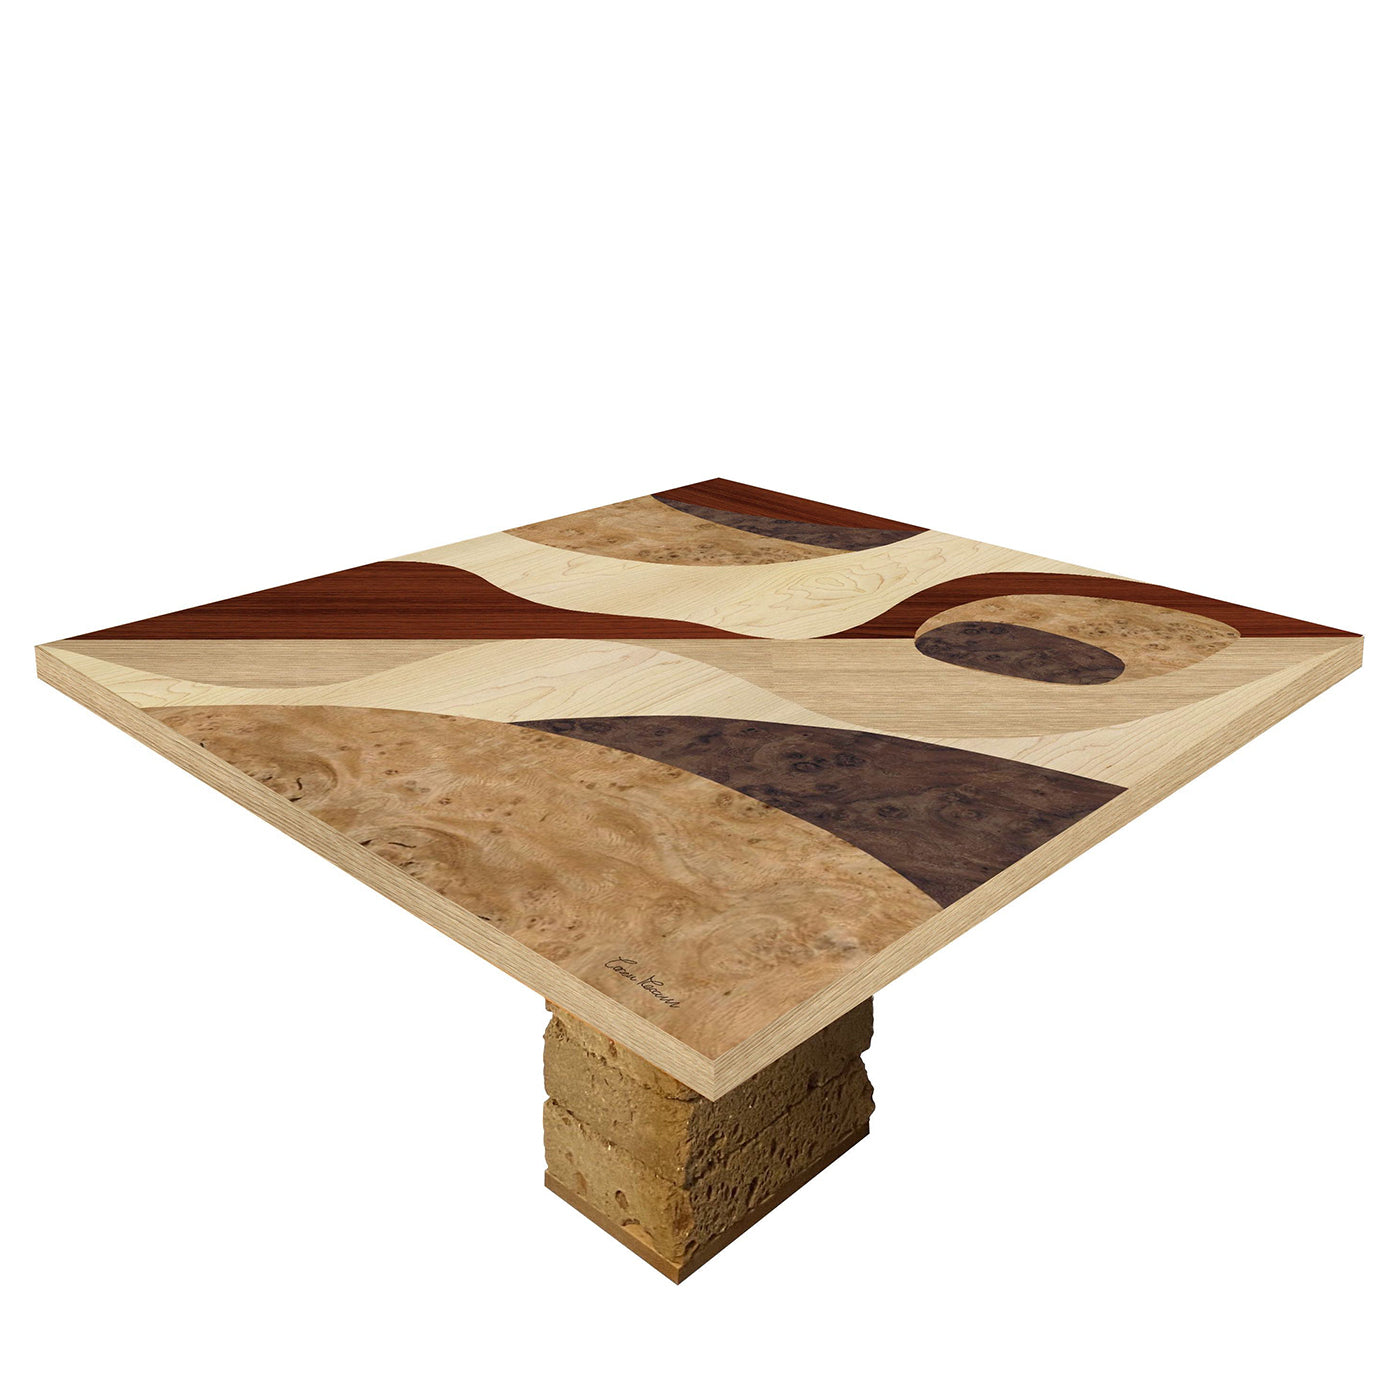 Tarsia Tables Tt4 Square Polychrome Table by Mascia Meccani - Alternative view 3